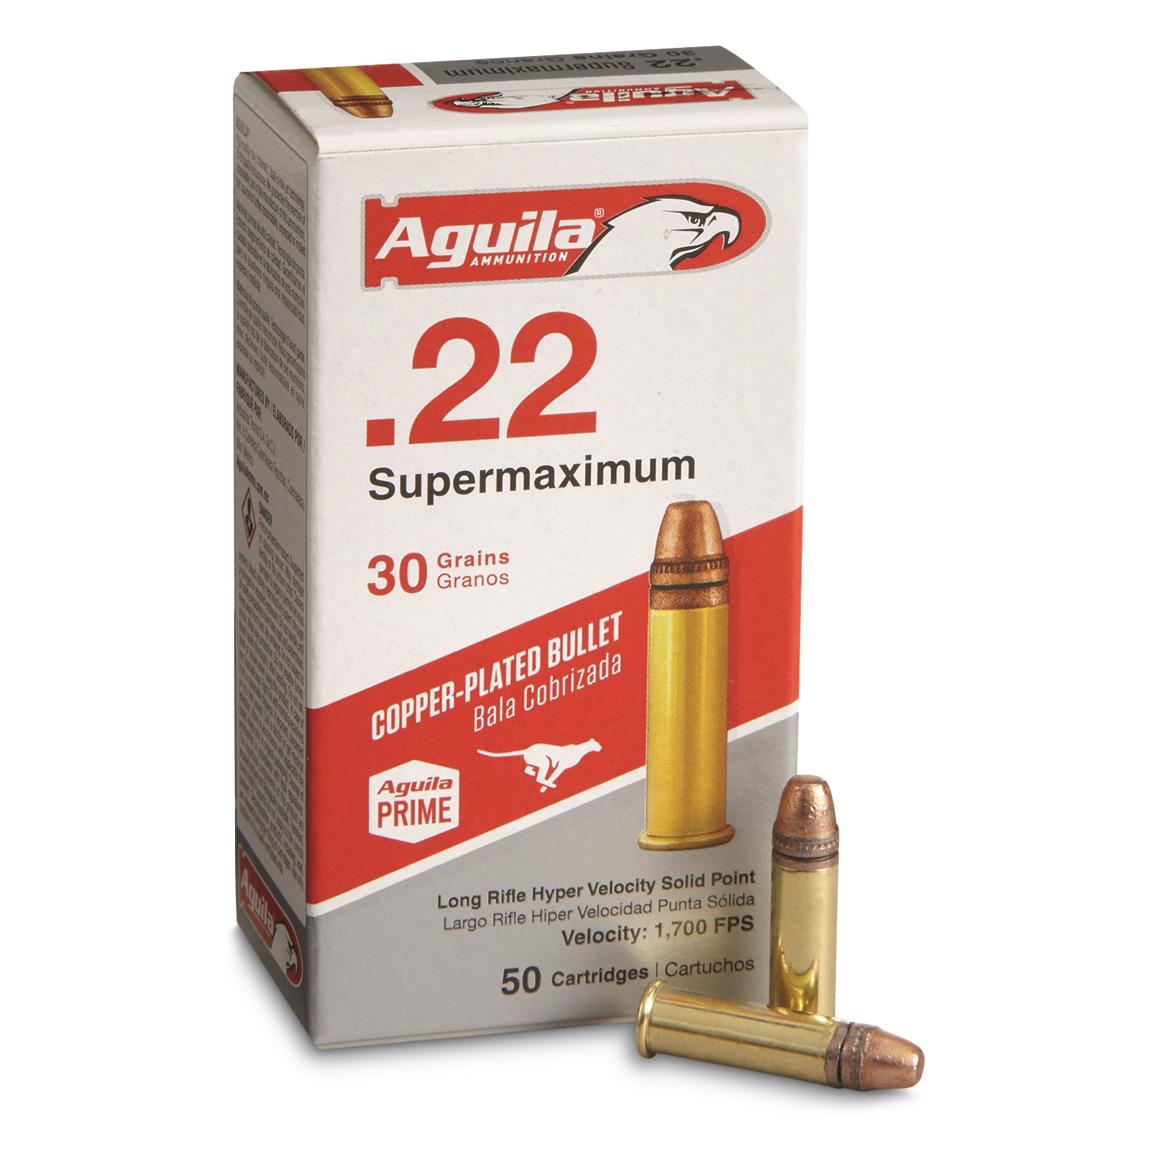 2 Pack Details about   .17 MACH 2 Ammo Can Decal Gun Ammunition Box Firearm Orange Sticker OR 